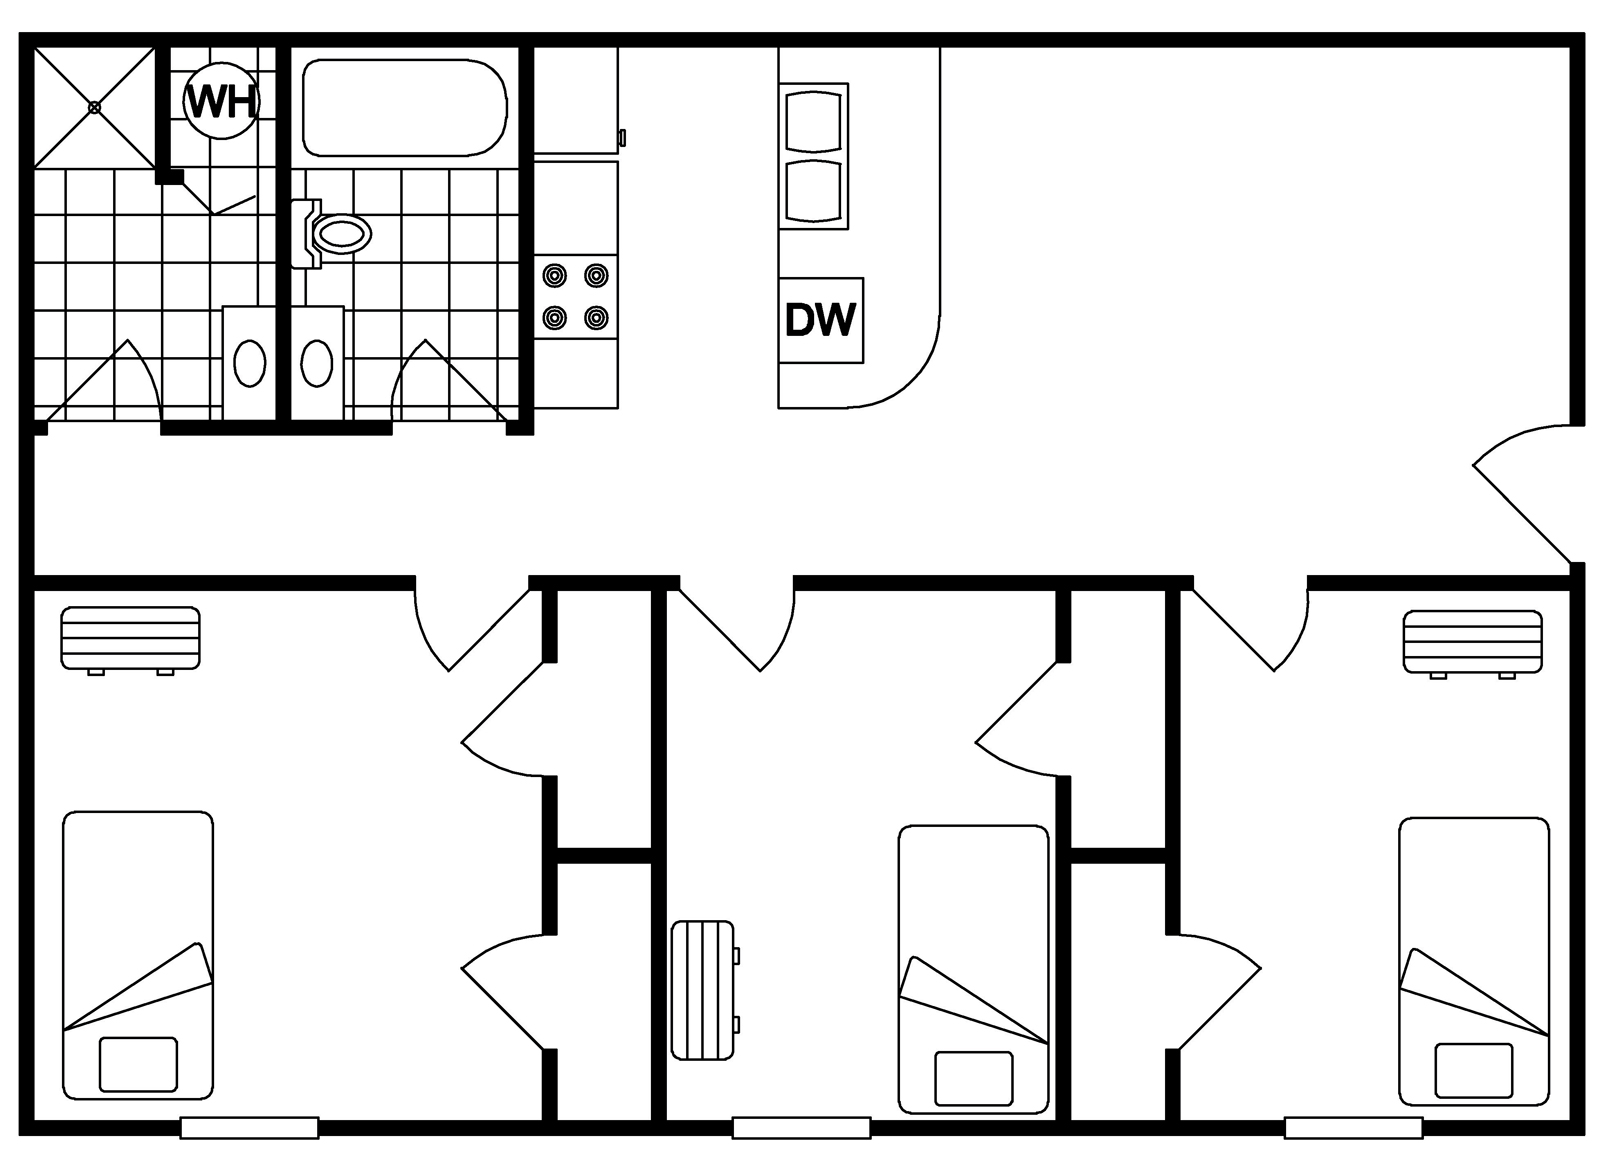 3 Bedroom 1.5 Bath Floor Plan Illustration